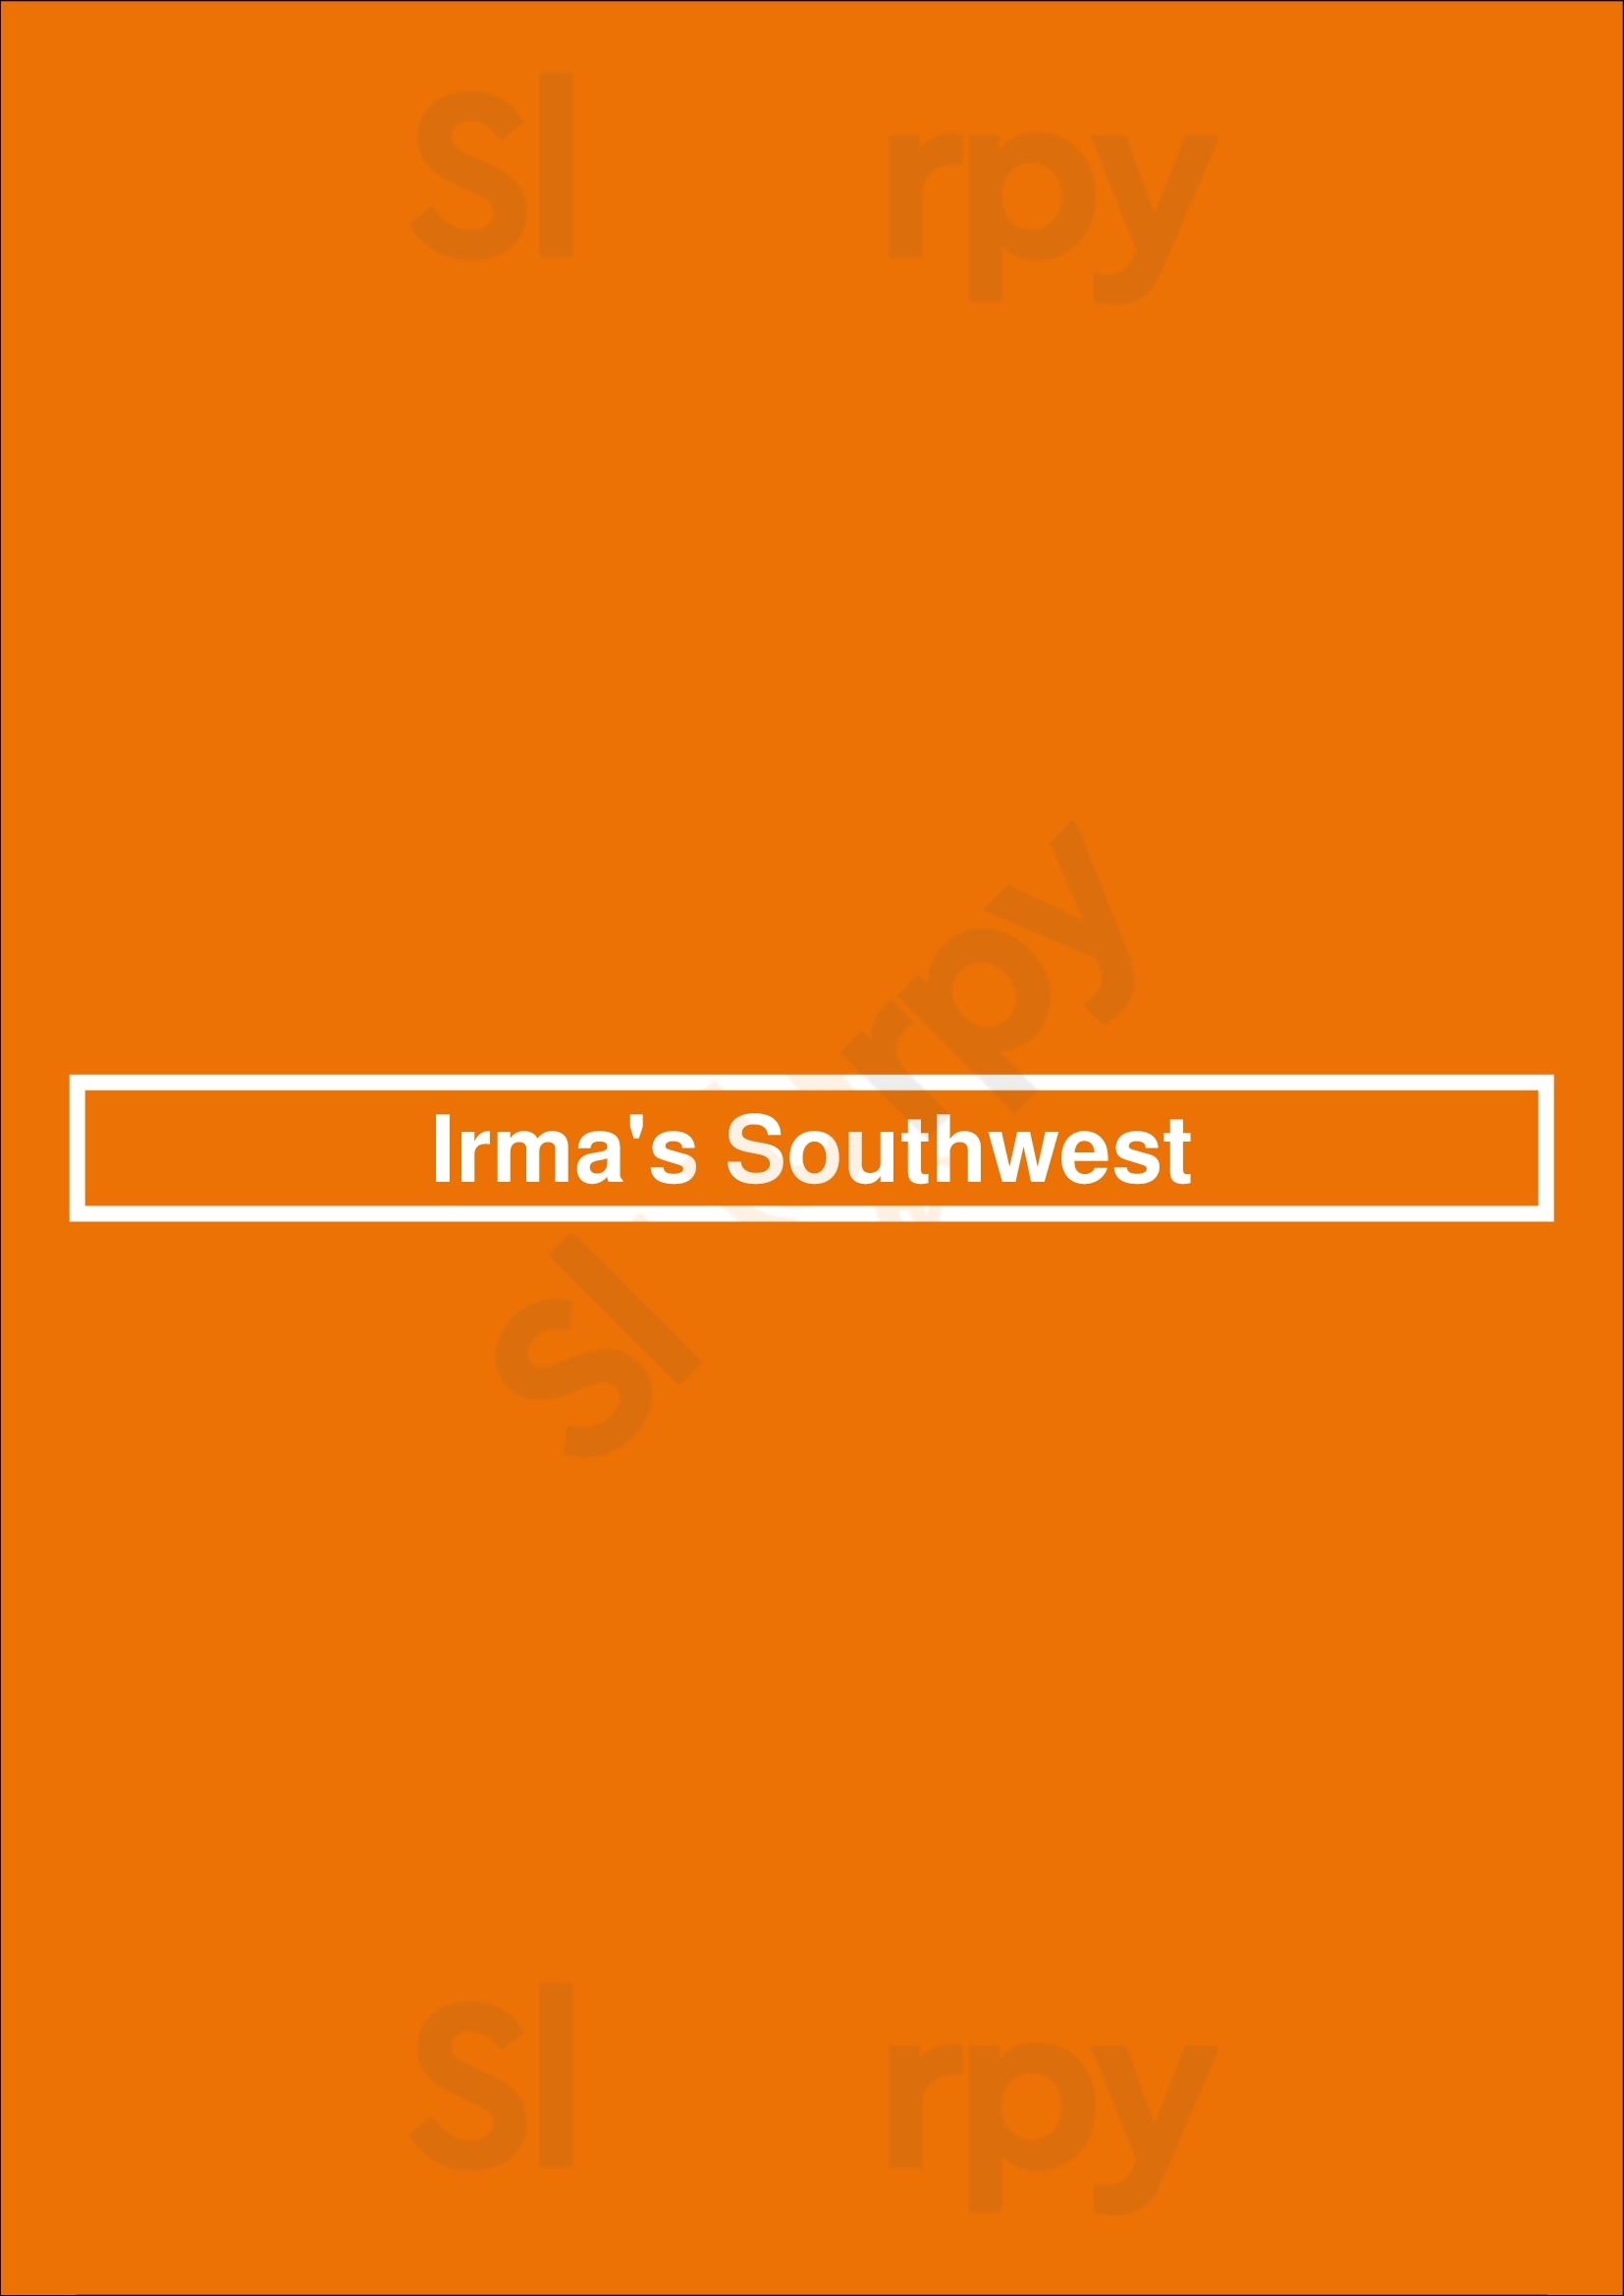 Irma's Southwest Houston Menu - 1